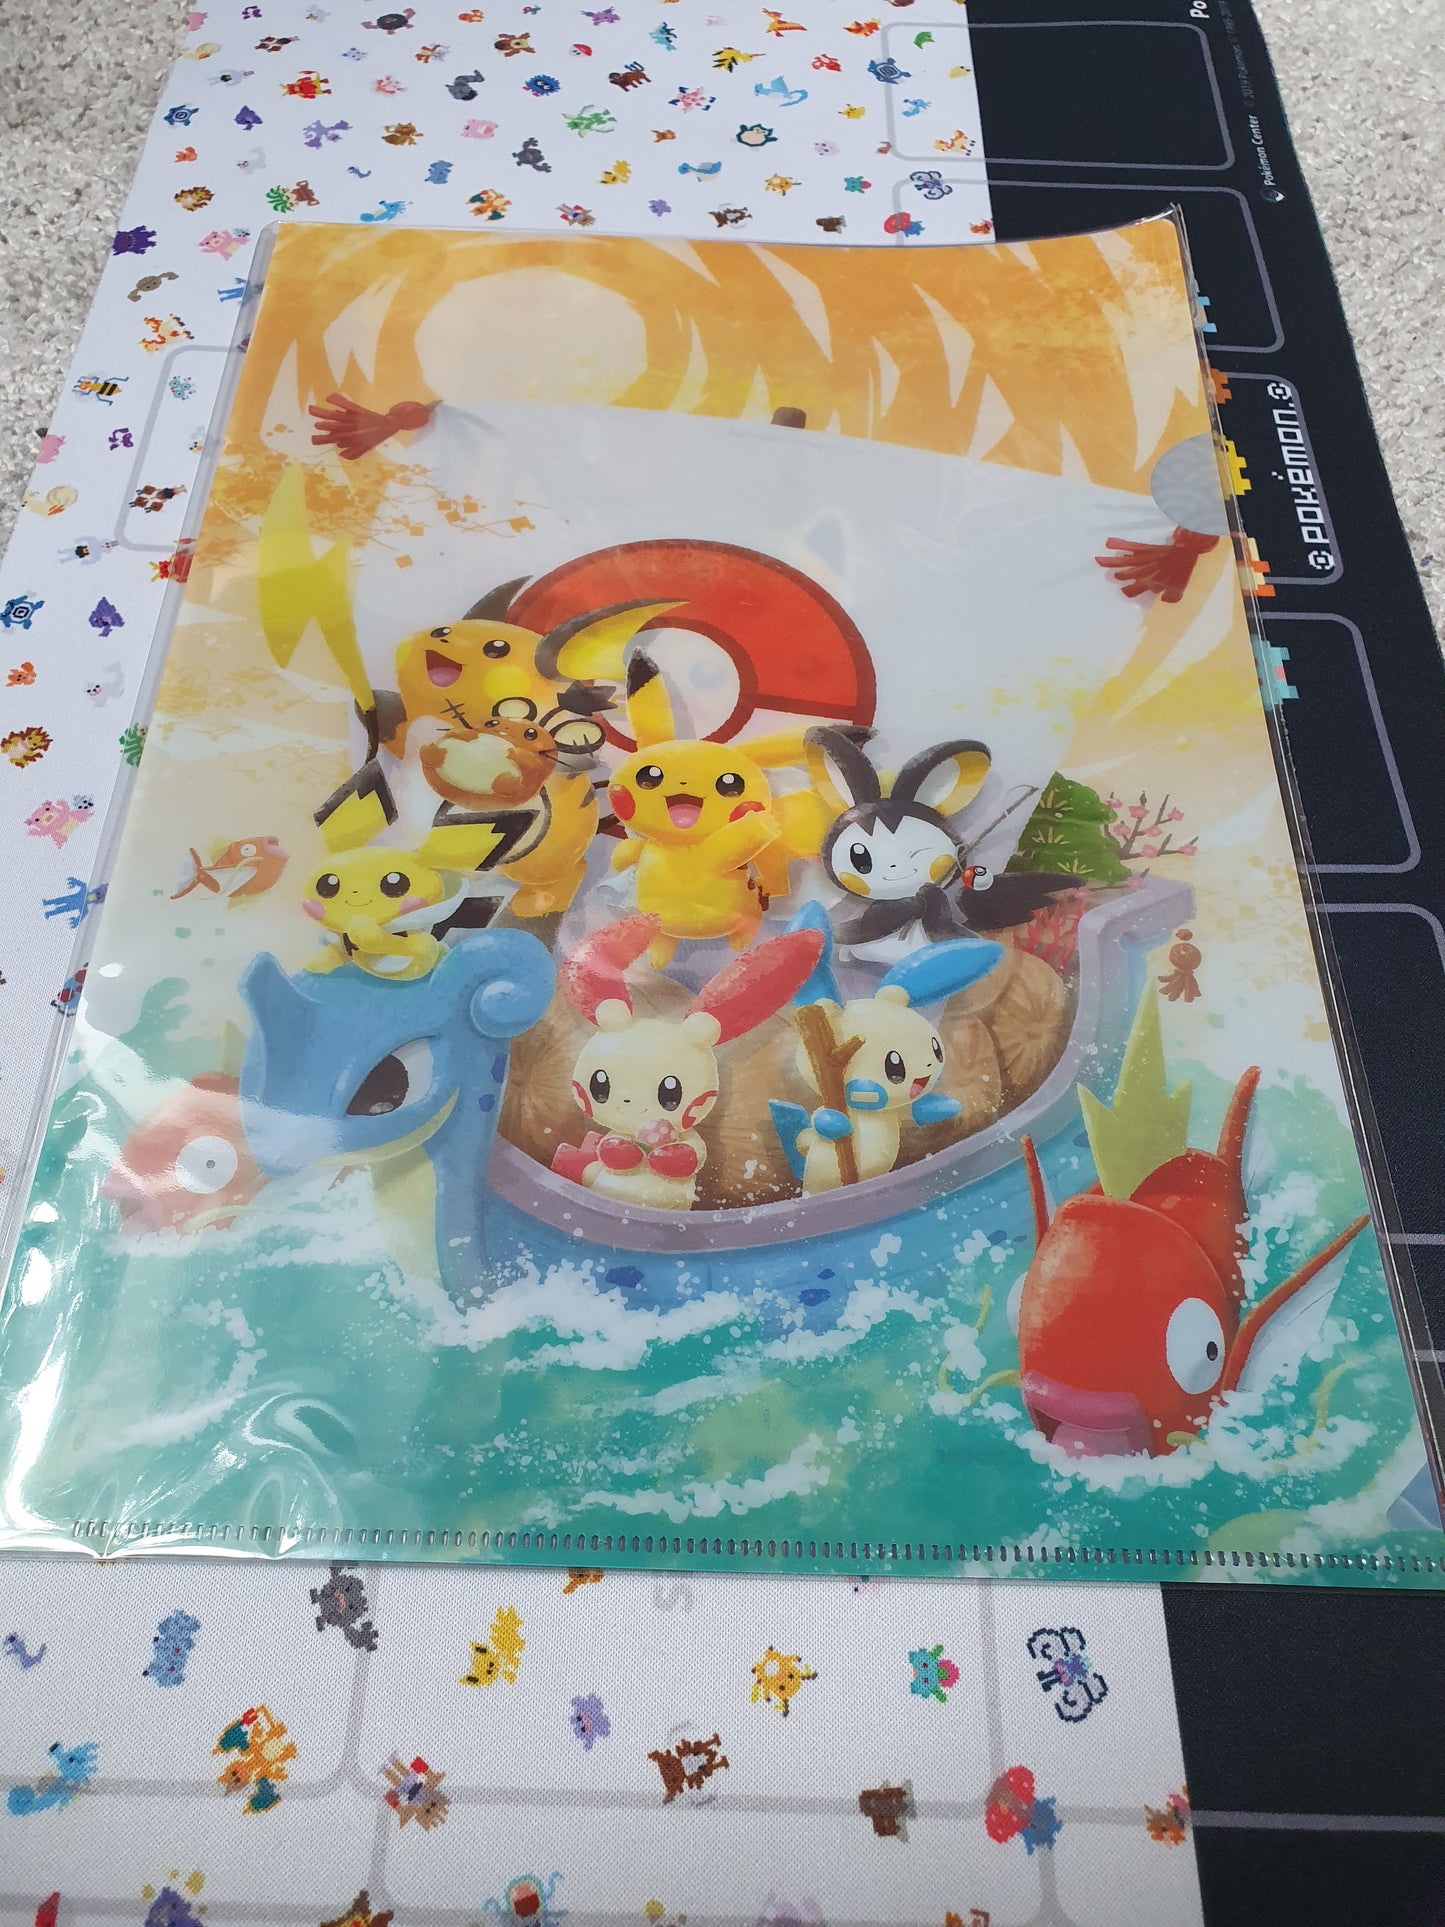 Pokémon Center Original Pikachu & Friends ride Lapras A4 Folder/Art Print